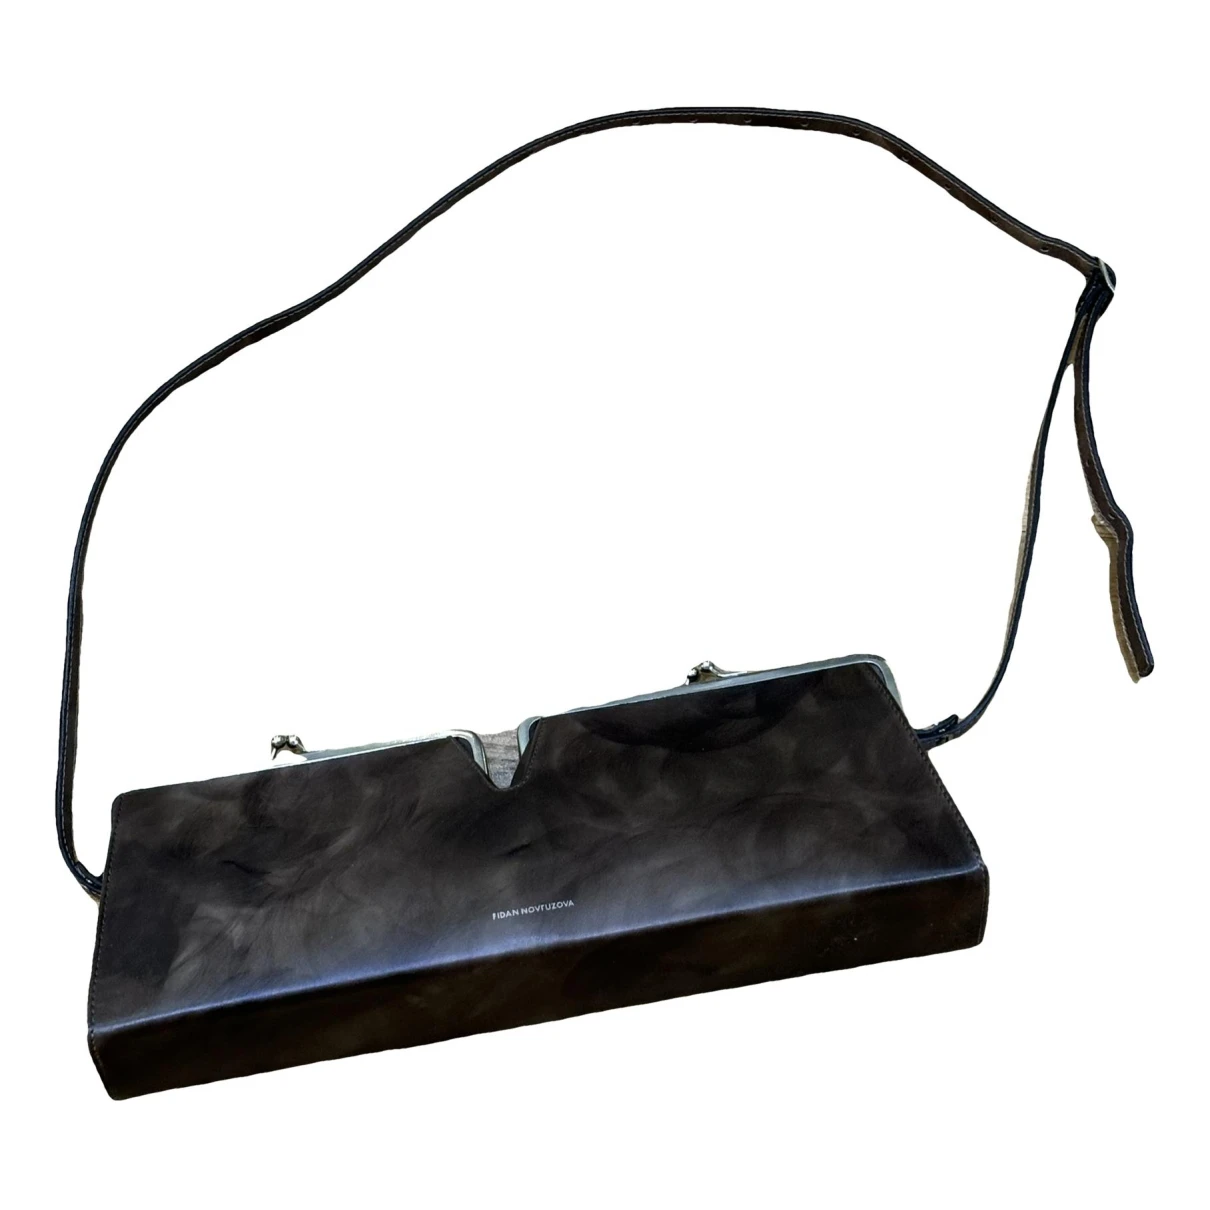 Pre-owned Fidan Novruzova Leather Handbag In Brown